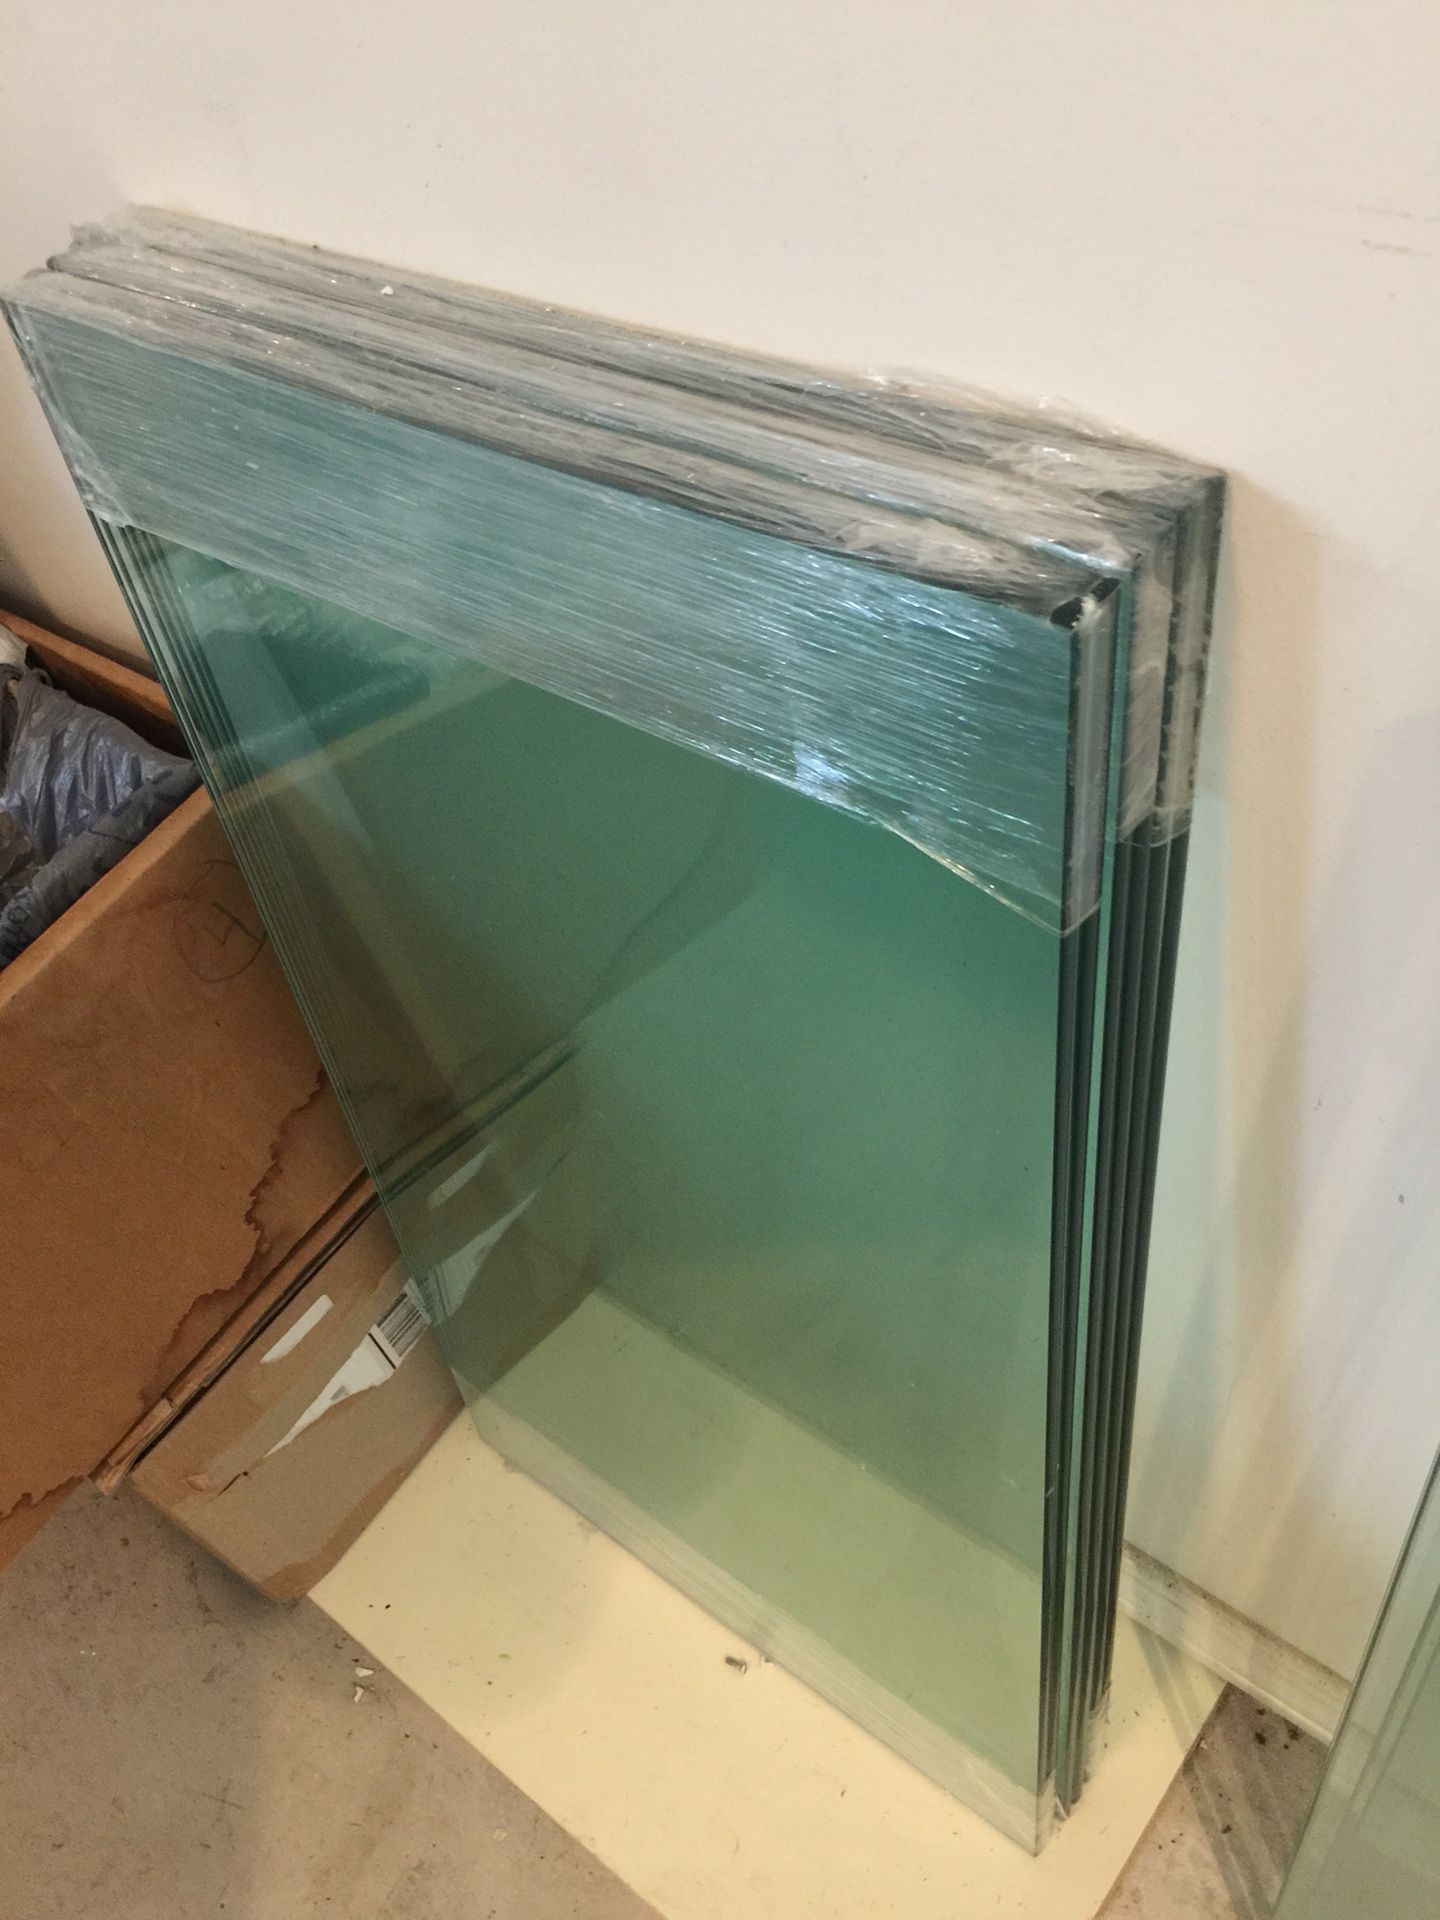 Six glass shelves 3/8” thick